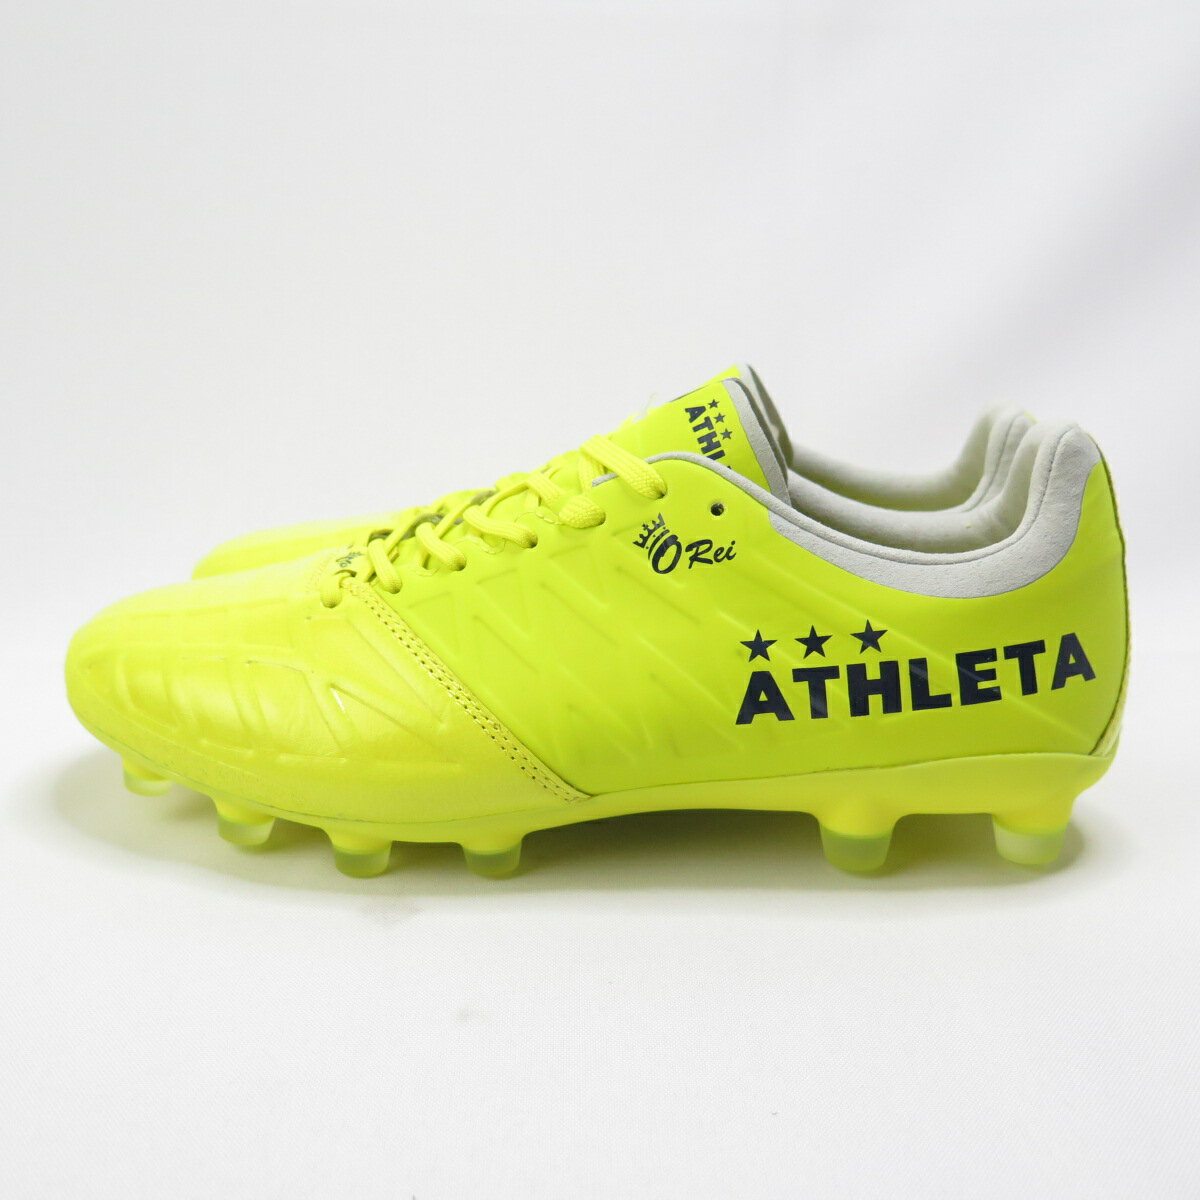 athleta football boots